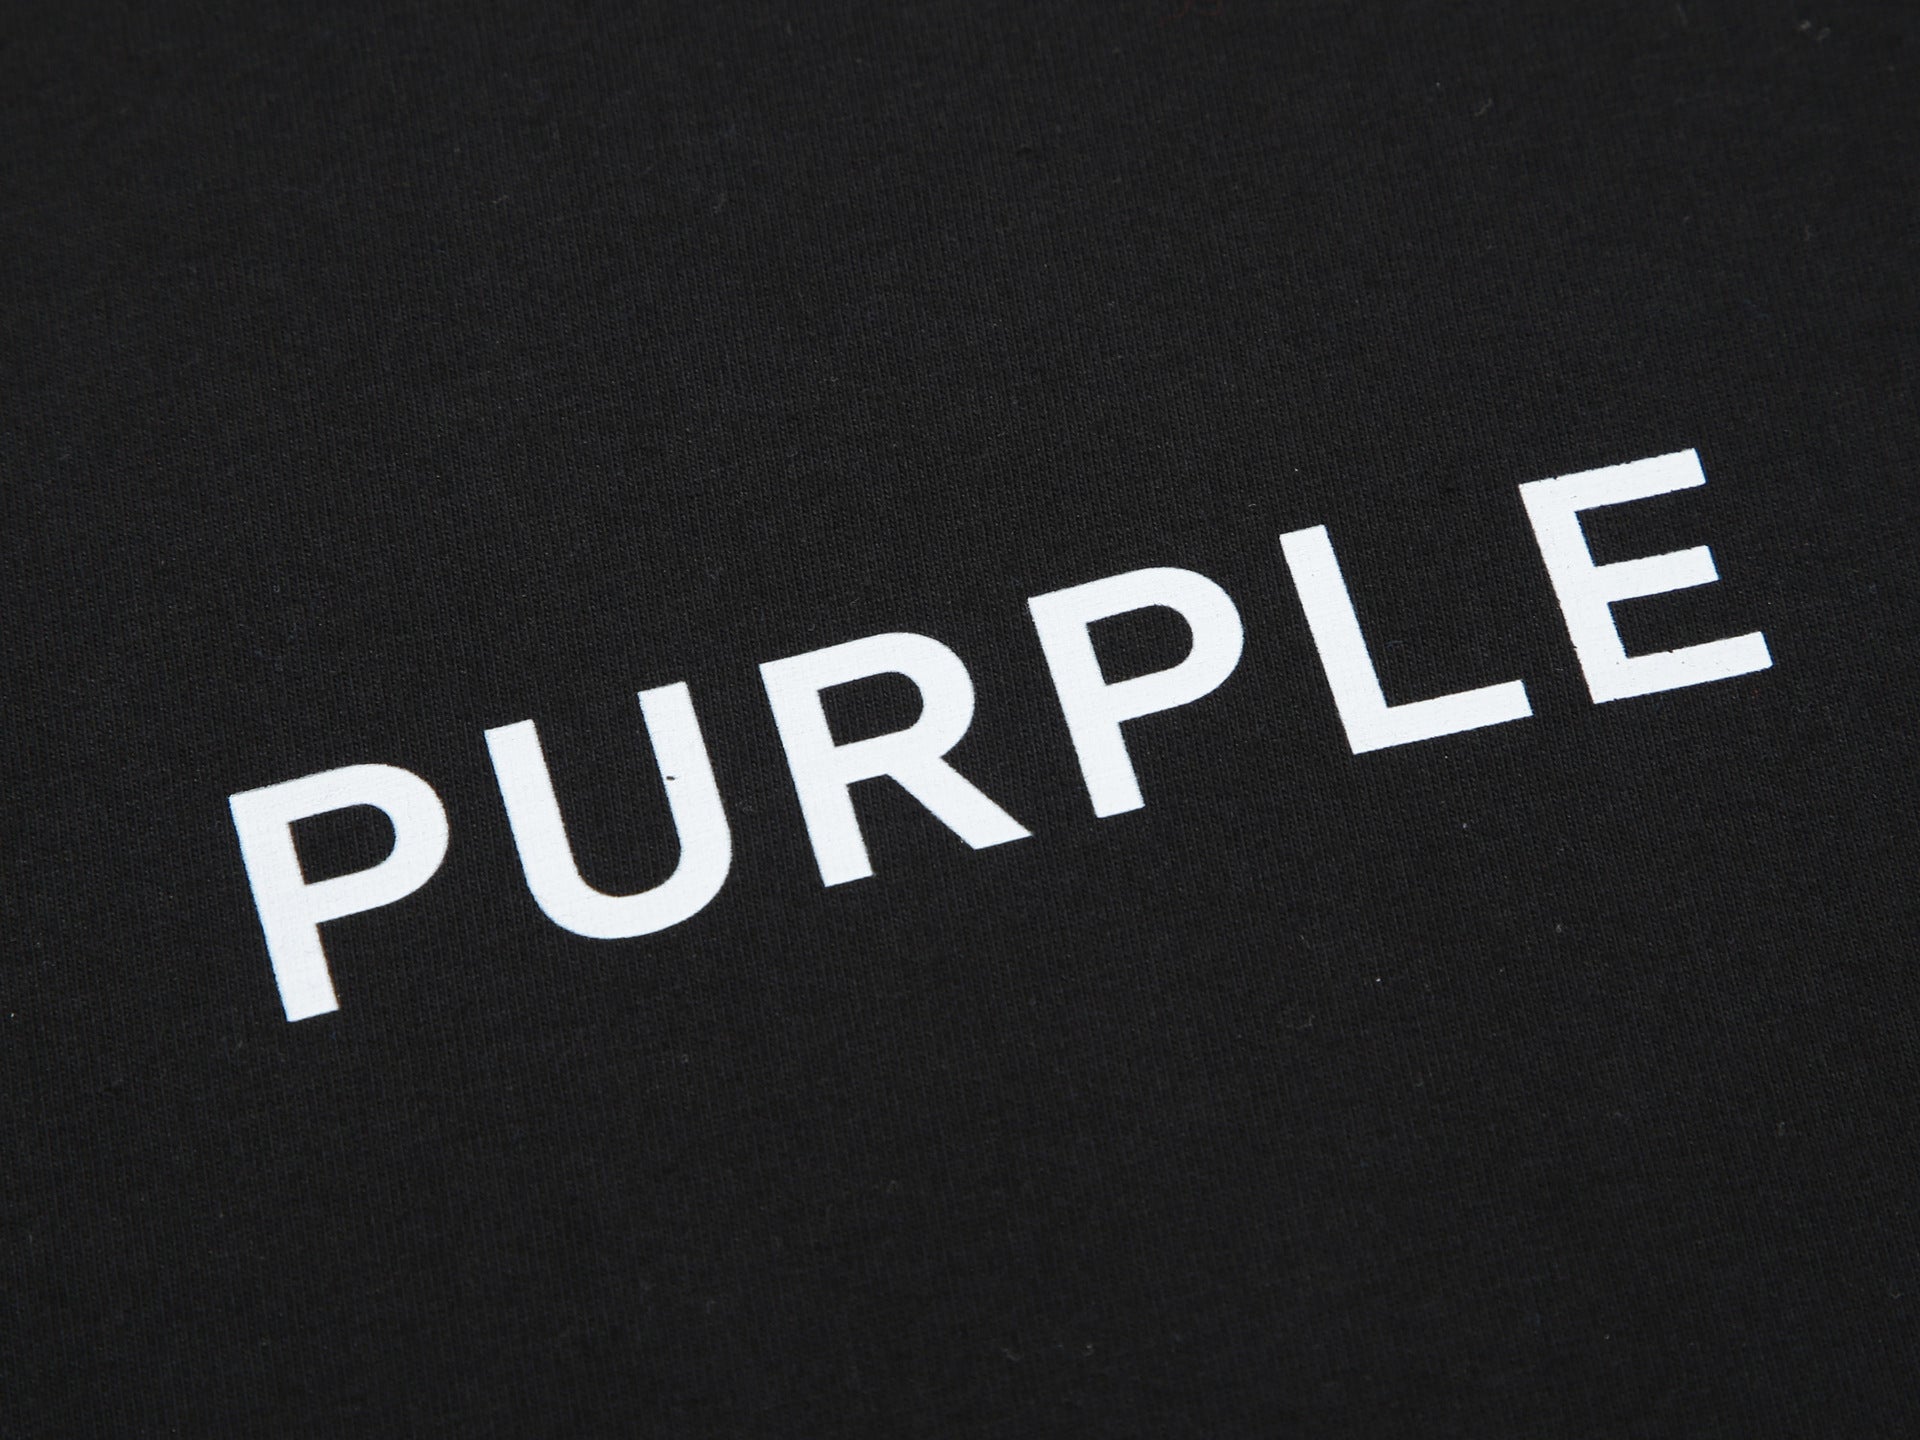 Purple Brand Clean Jersey Logo T-Shirt